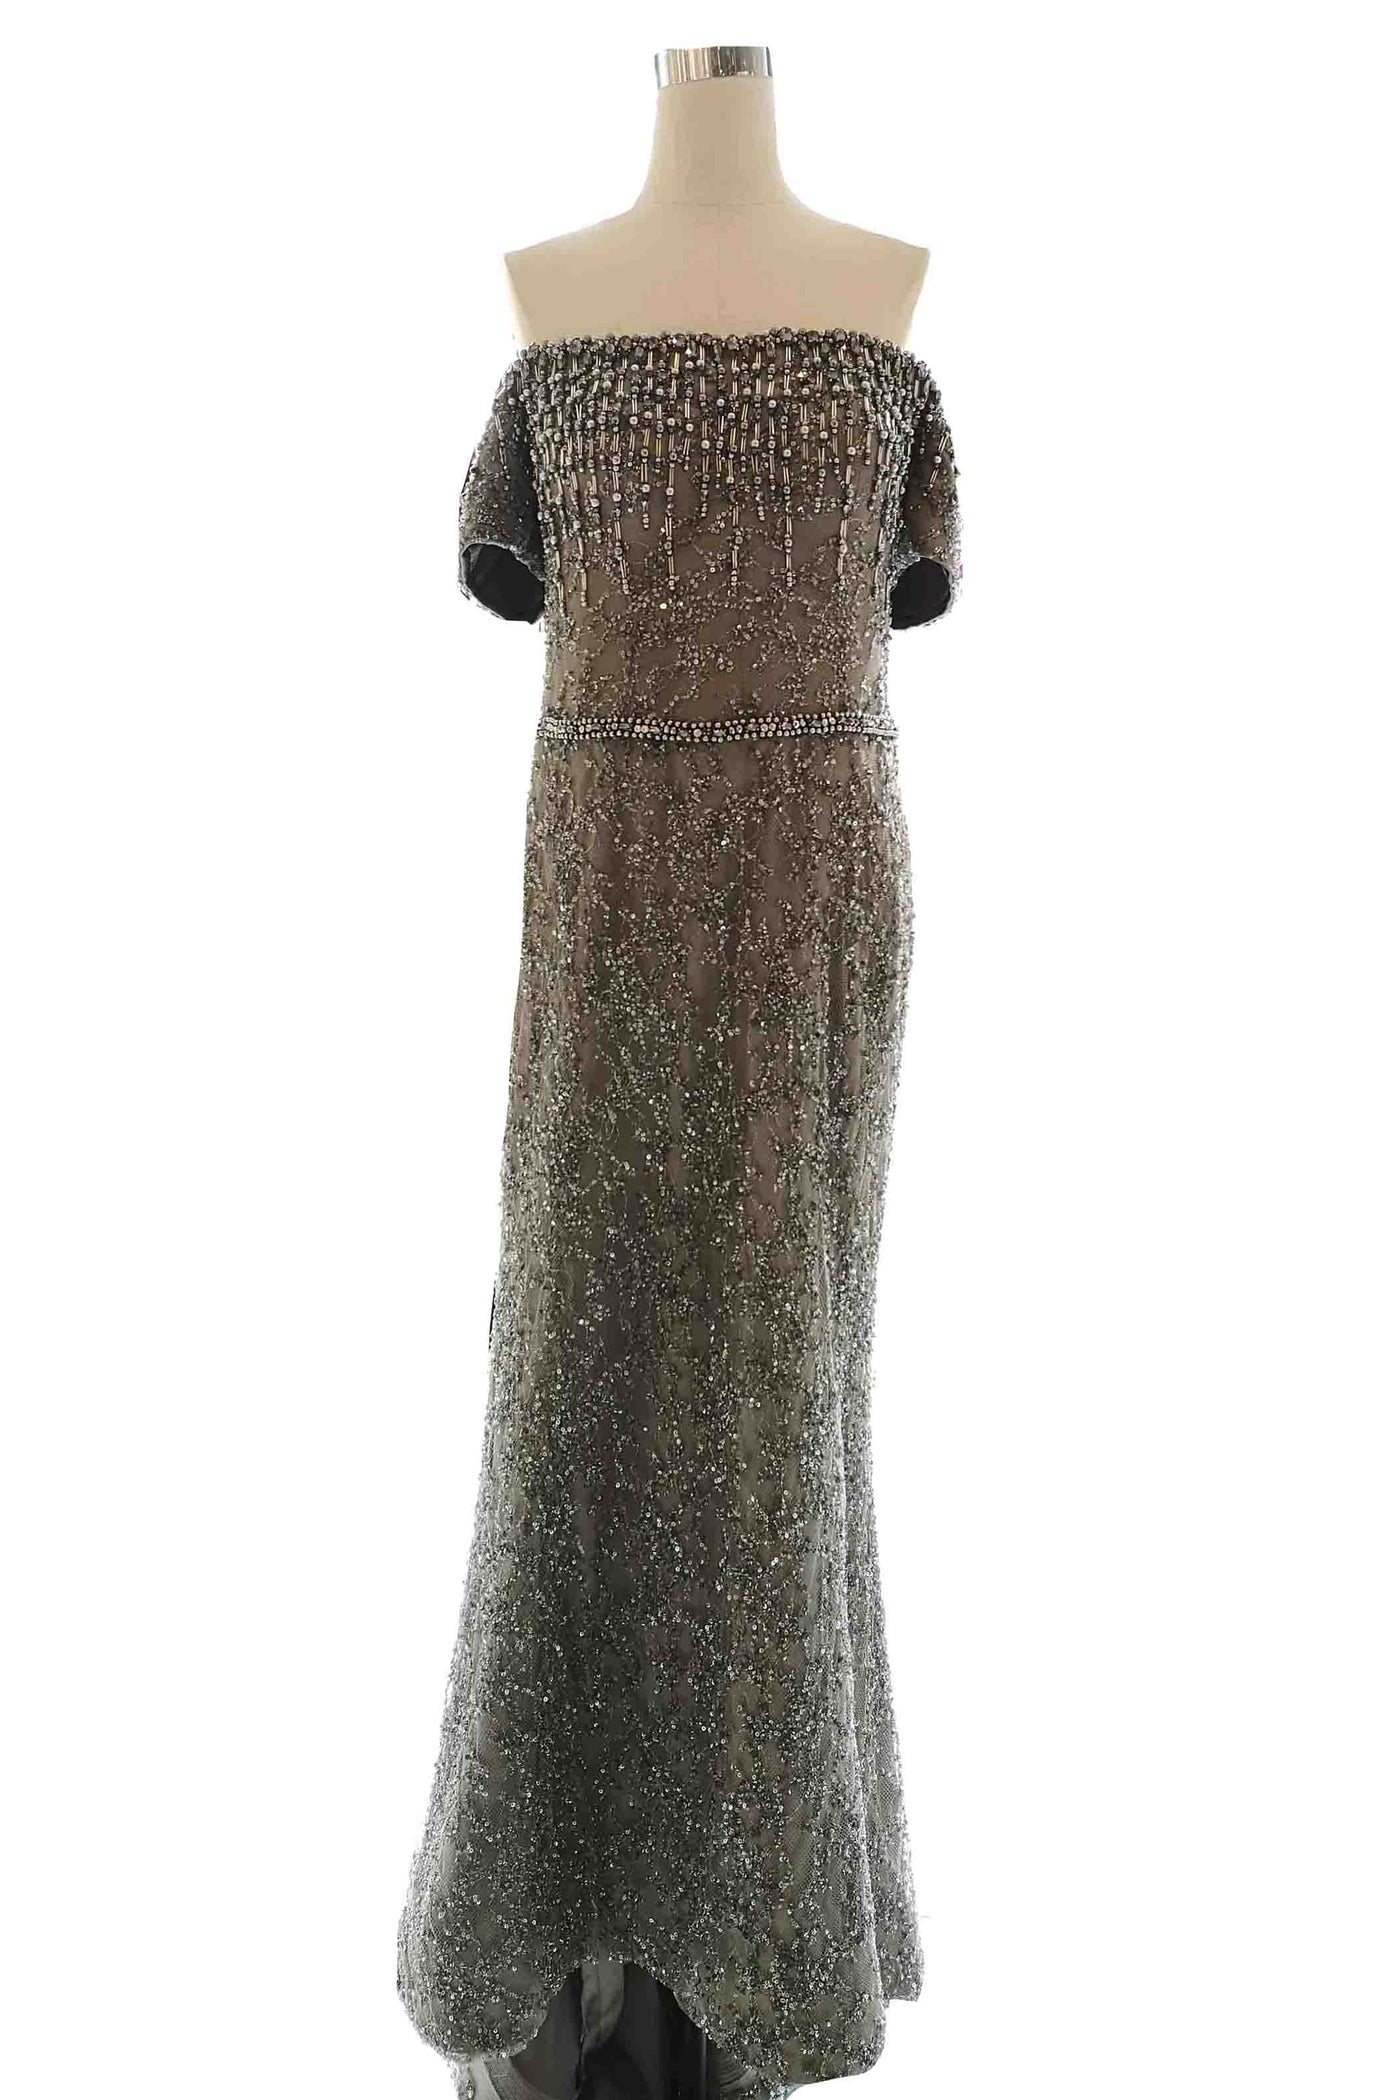 Buy : Winda Halomoan - Silver Sparkly Mermaid Gown